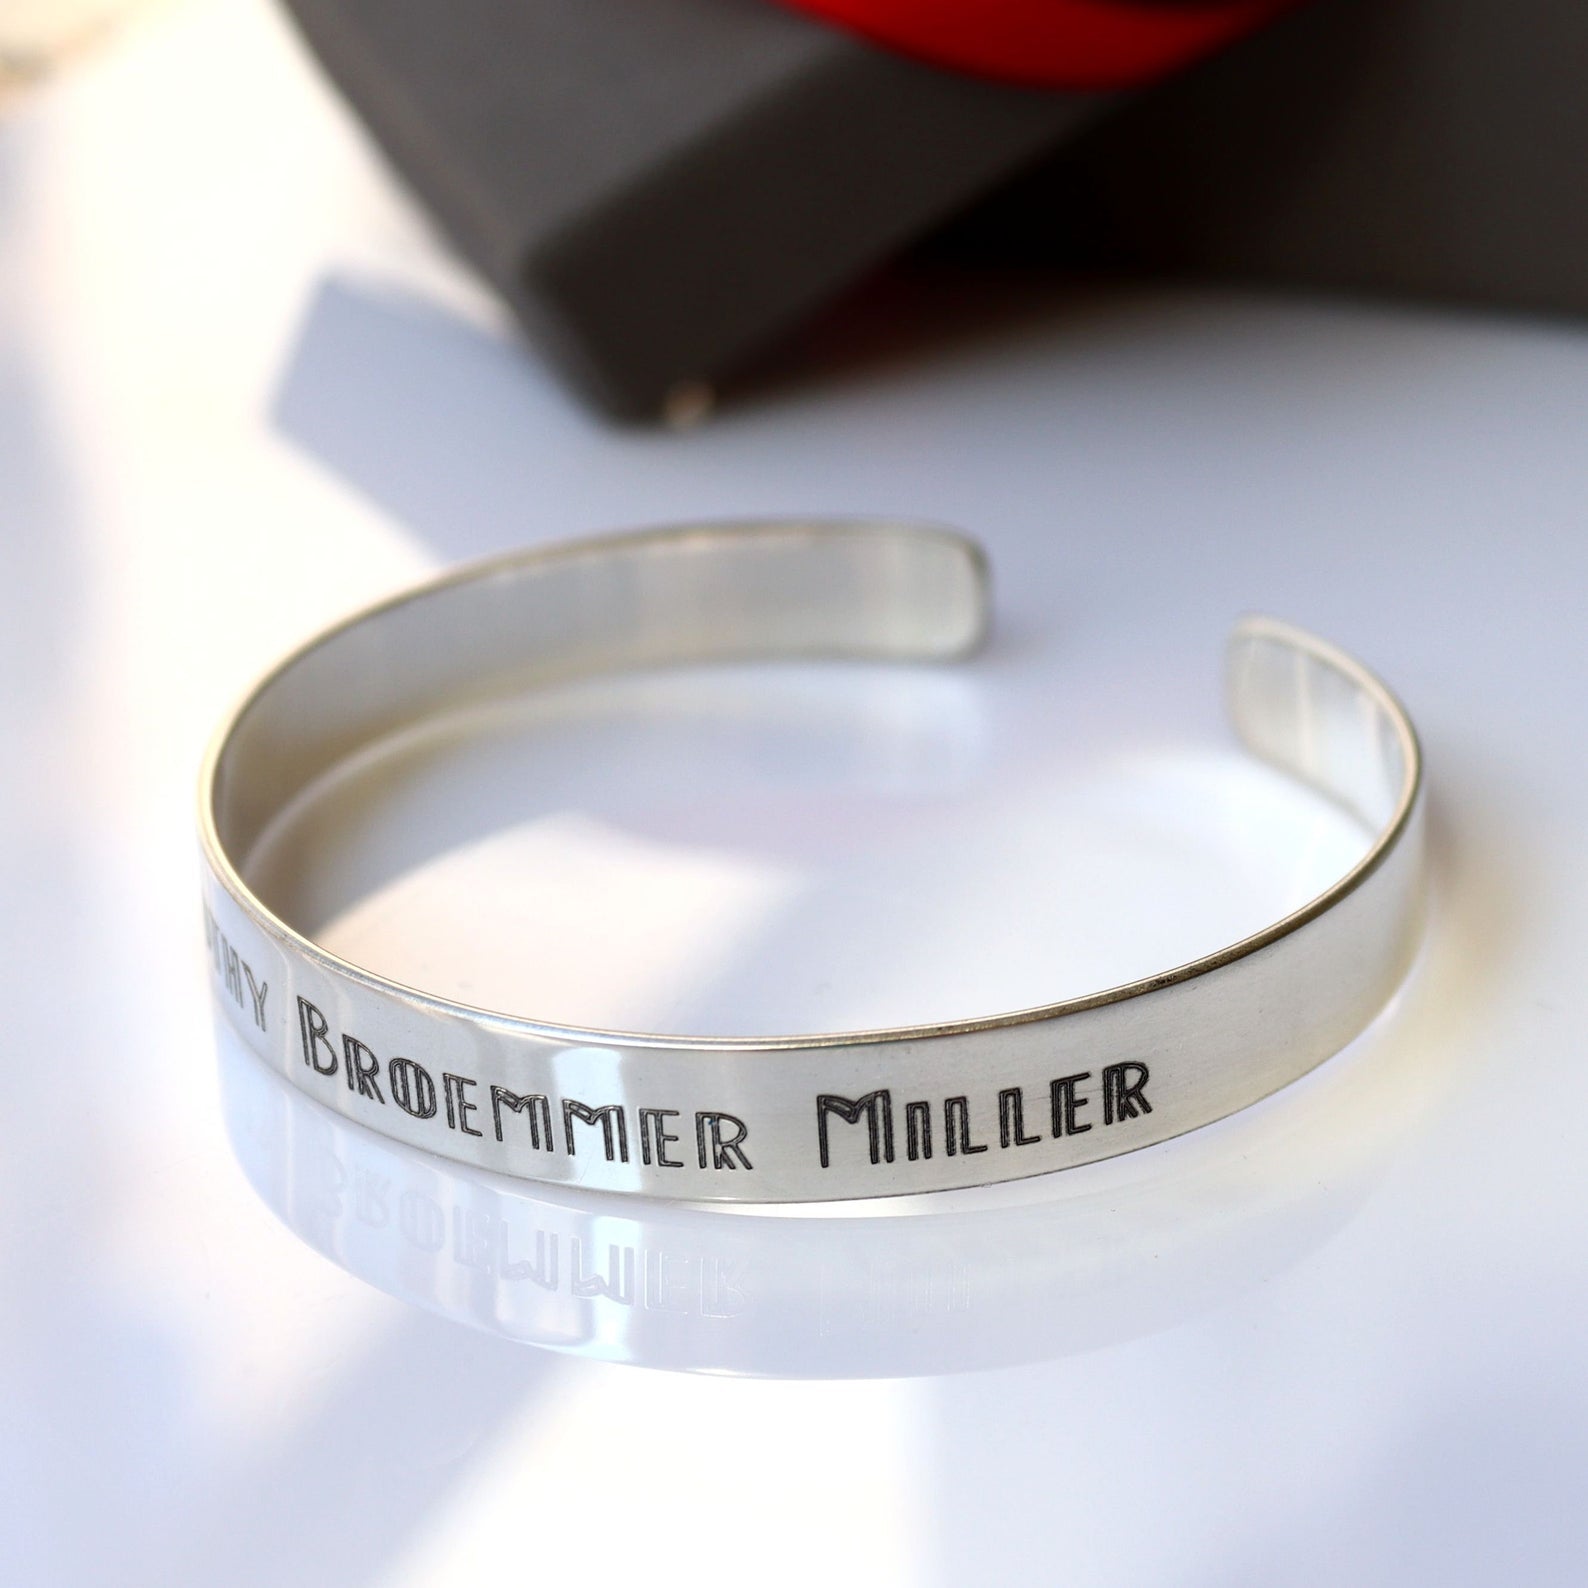 Personalized Bracelets for Men - Engraved Bracelets for Men | FARUZO |  Bracelets for men, Mens bracelet personalized, Engraved bracelet